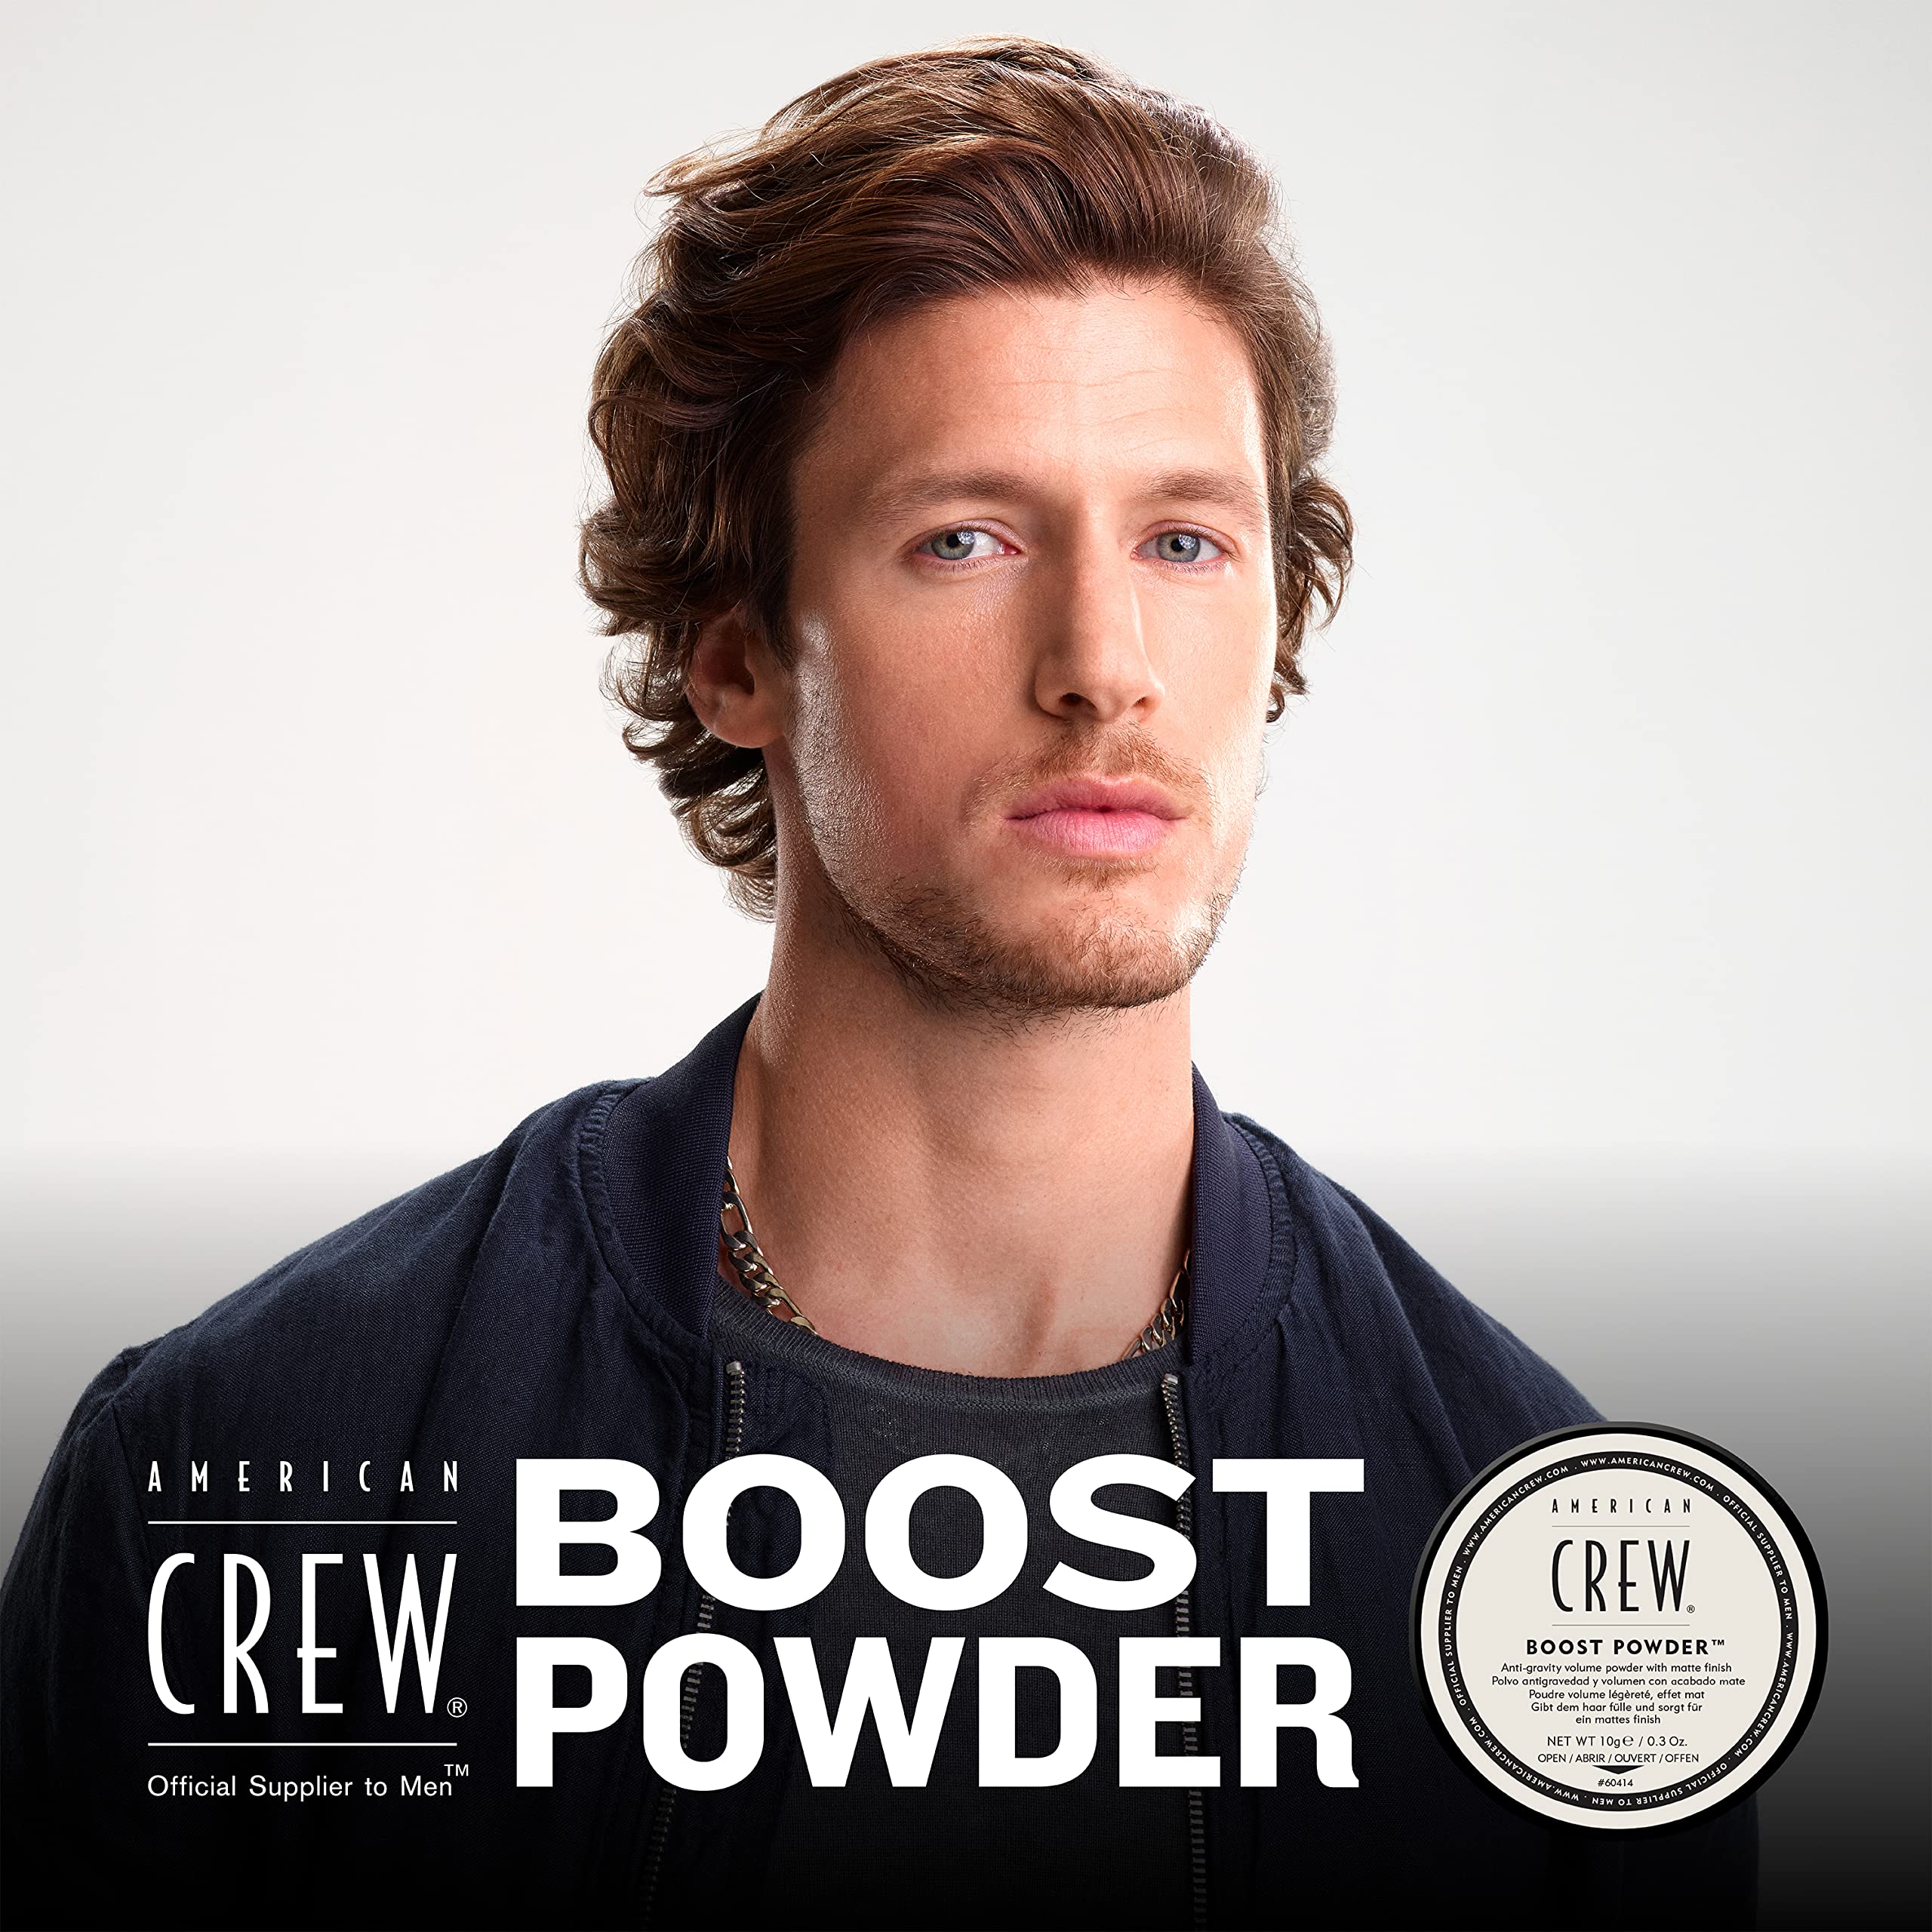 Men's Hair Boost Powder by American Crew, Provides Lift & Volume, 0.3 Oz